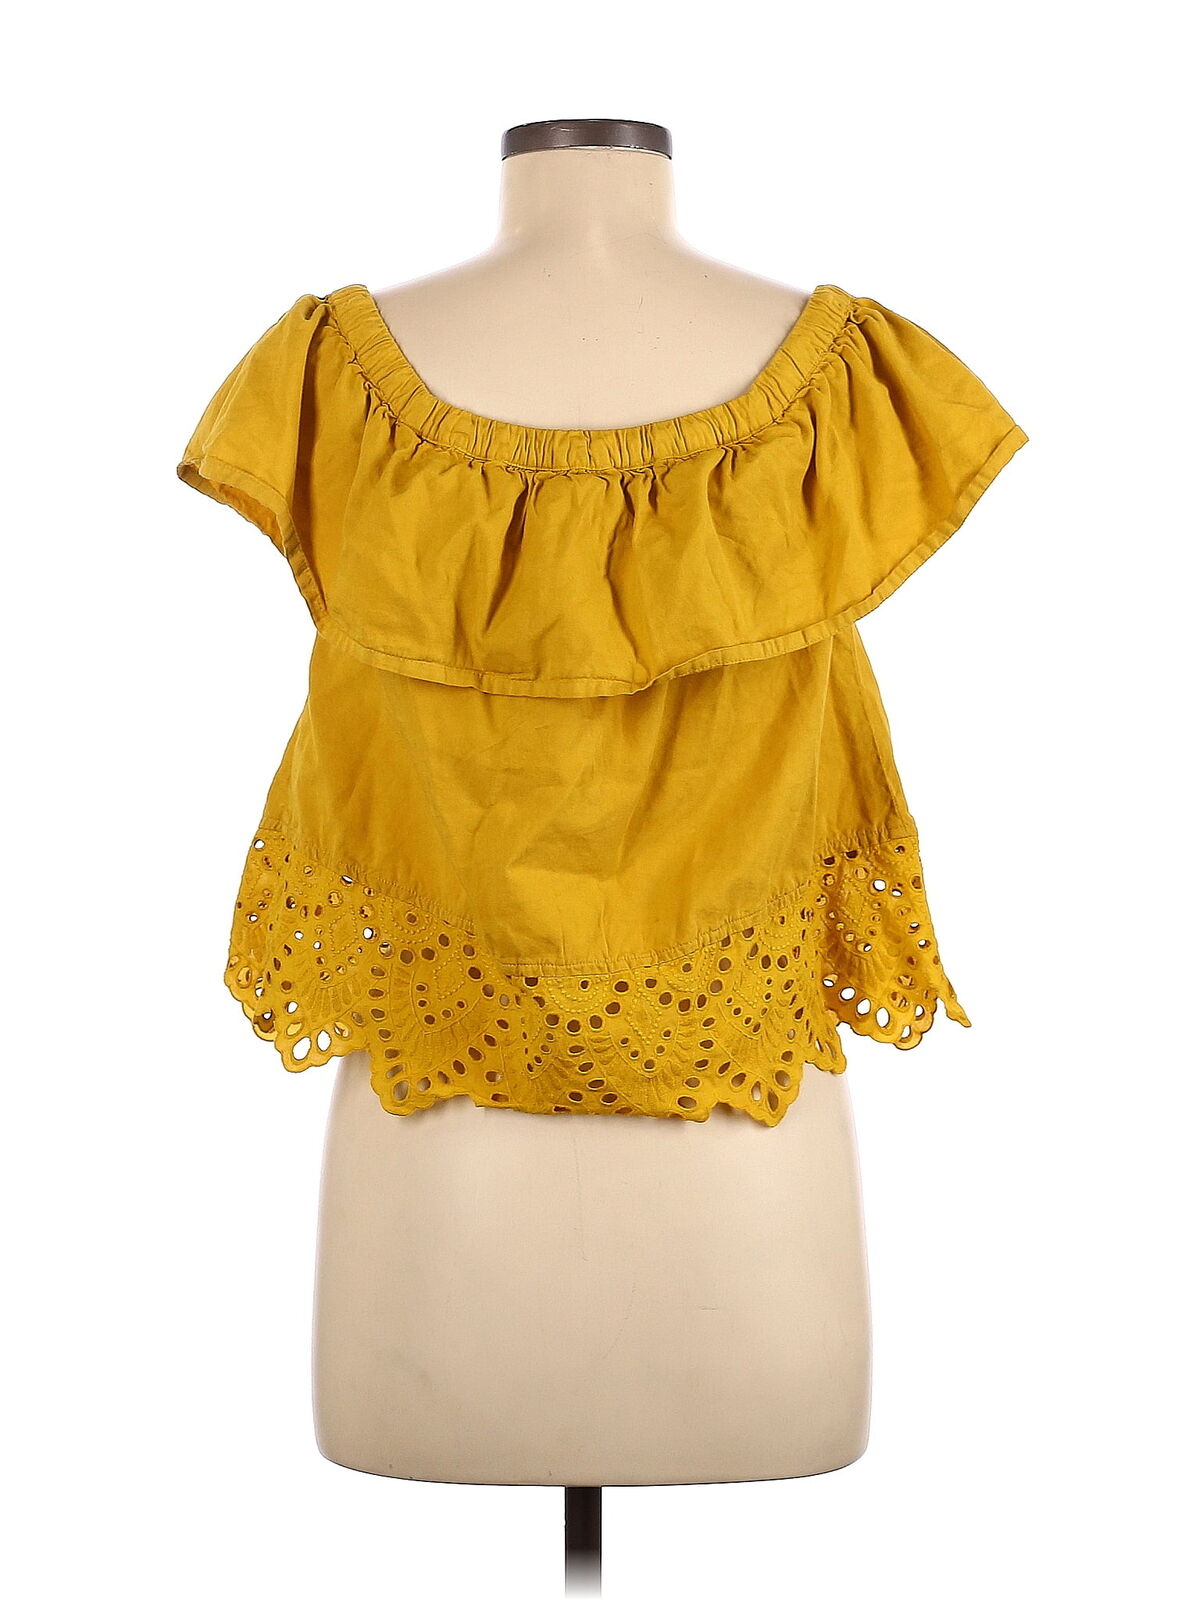 Madewell Women Yellow Short Sleeve Top XS - image 2